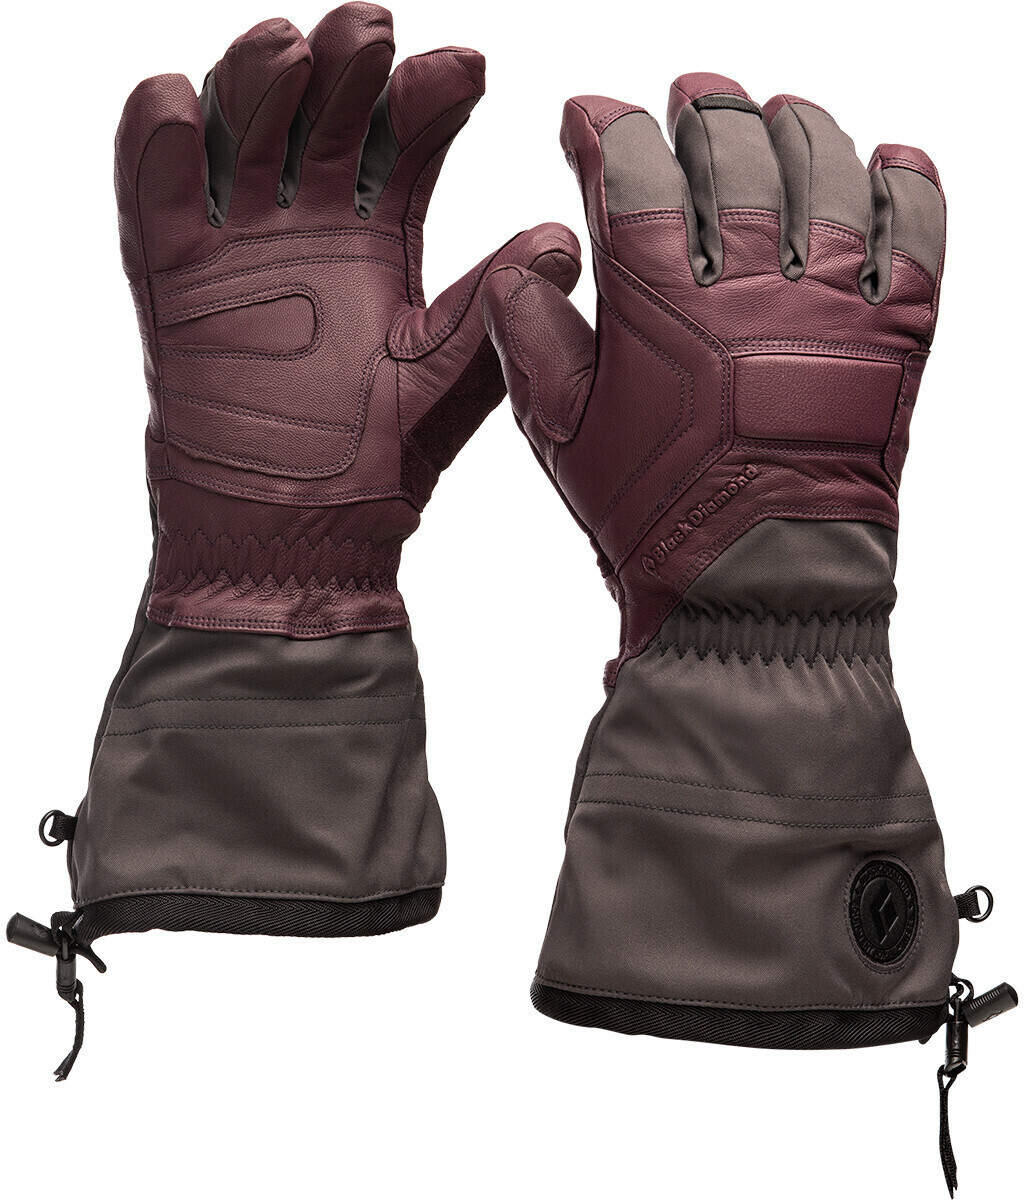 Photos - Ski Wear Black Diamond Women's Guide Gloves bordeaux 